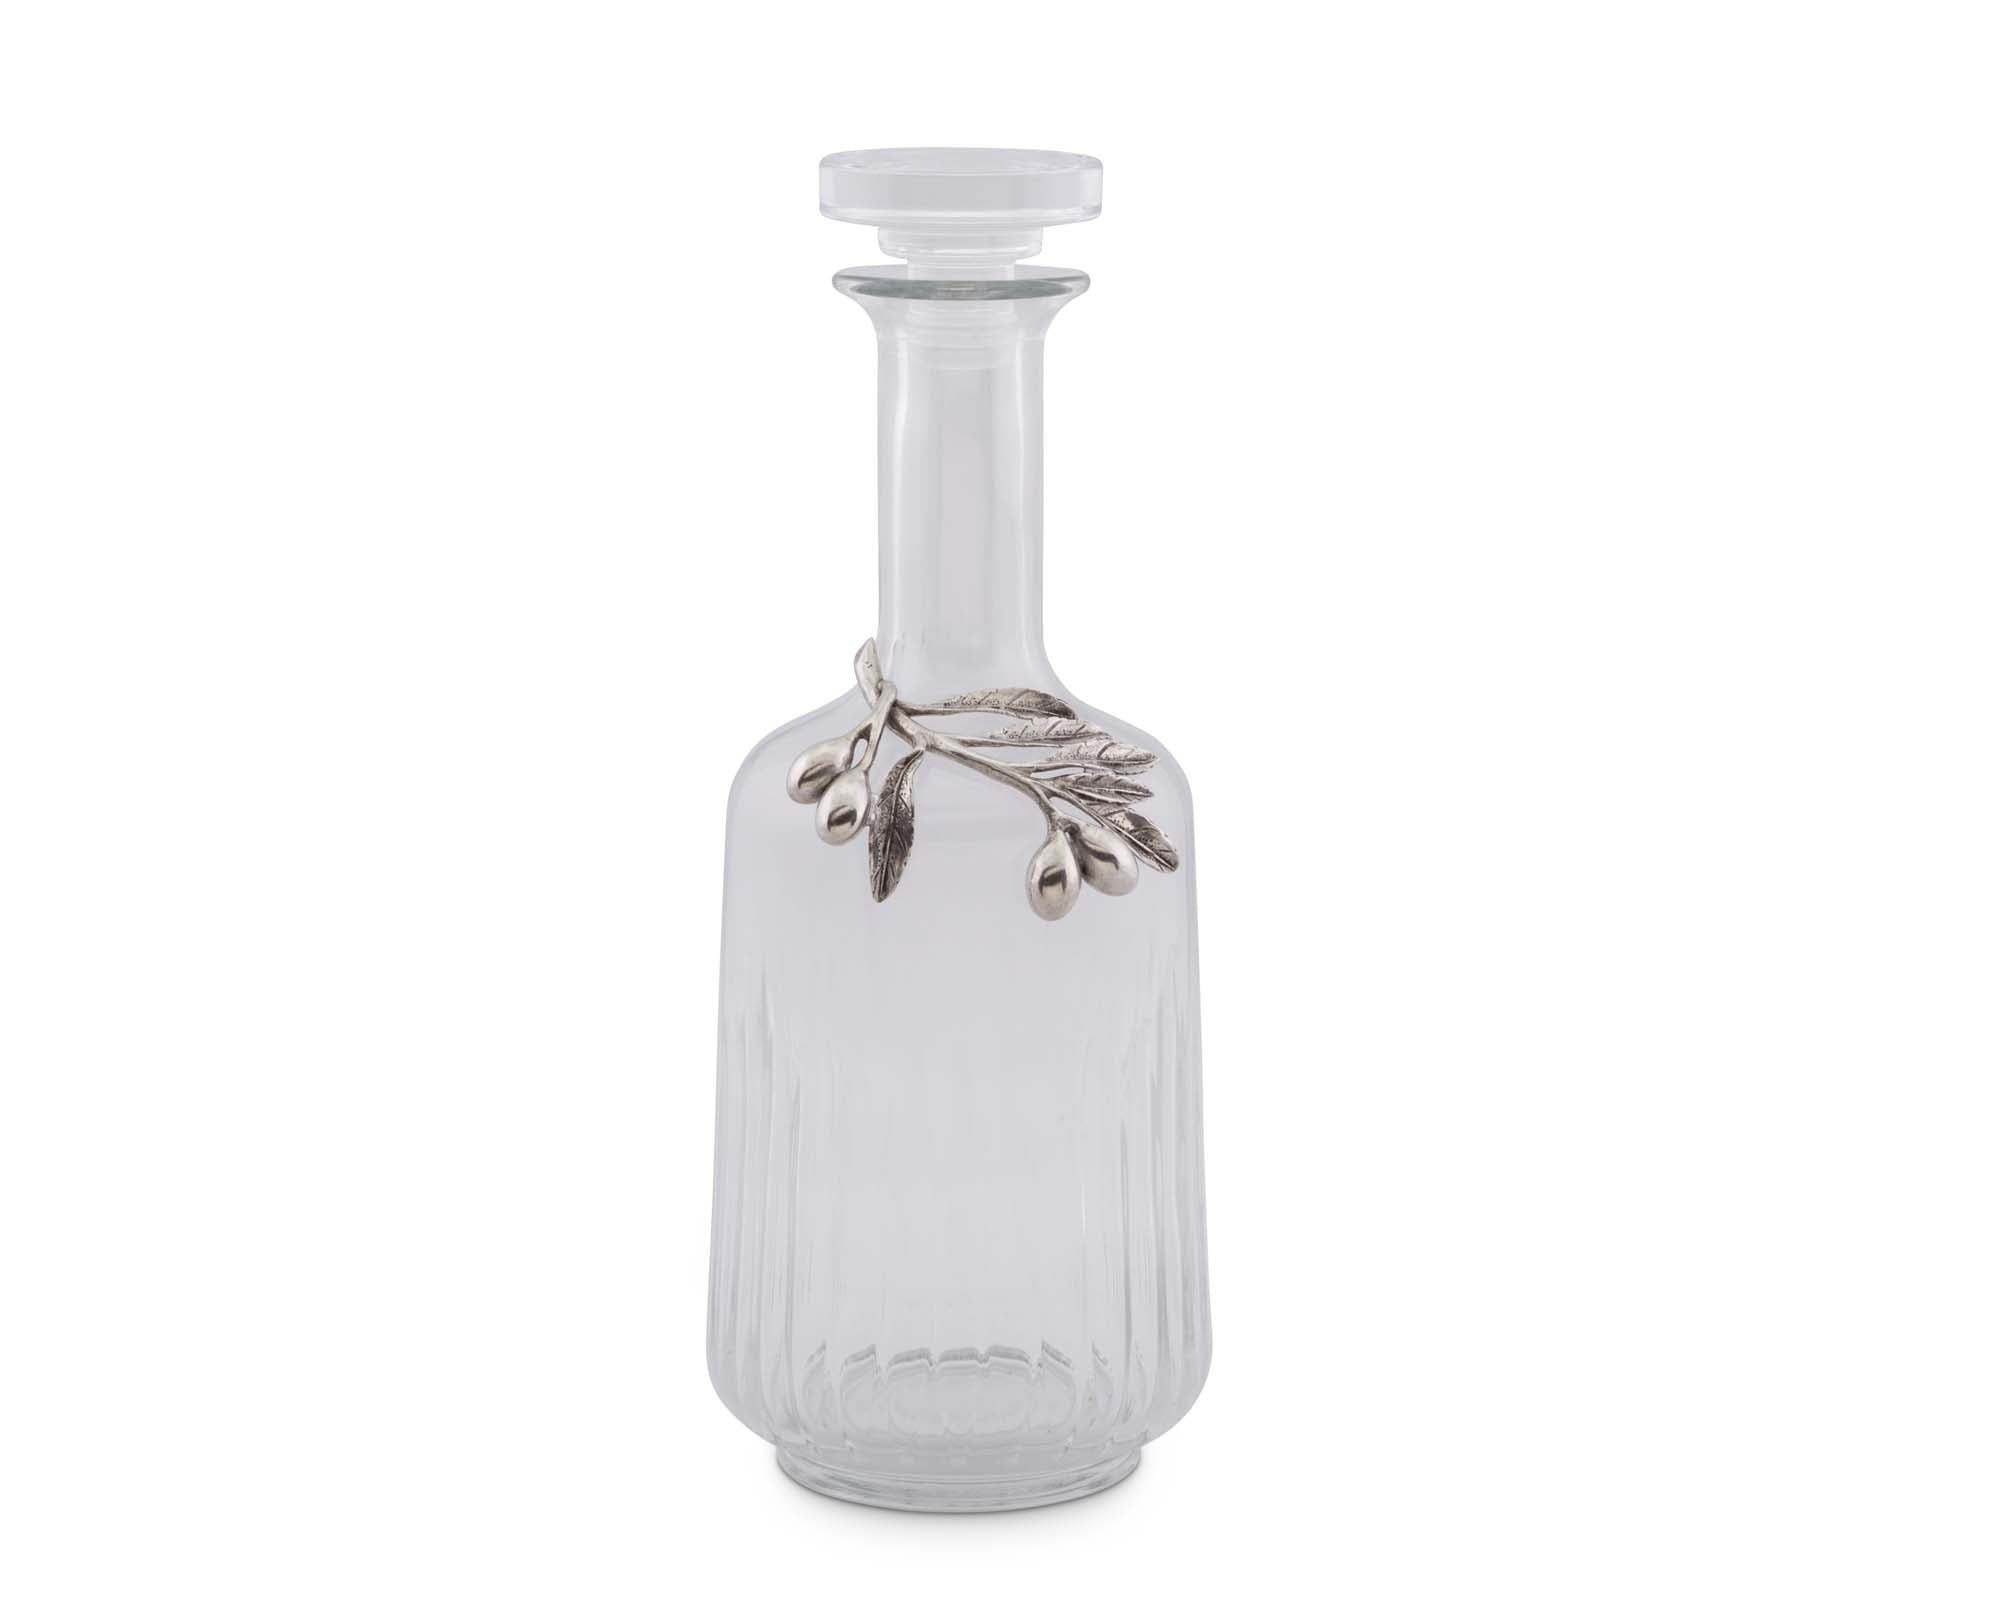 Vagabond House Olive Oil Bottle Product Image